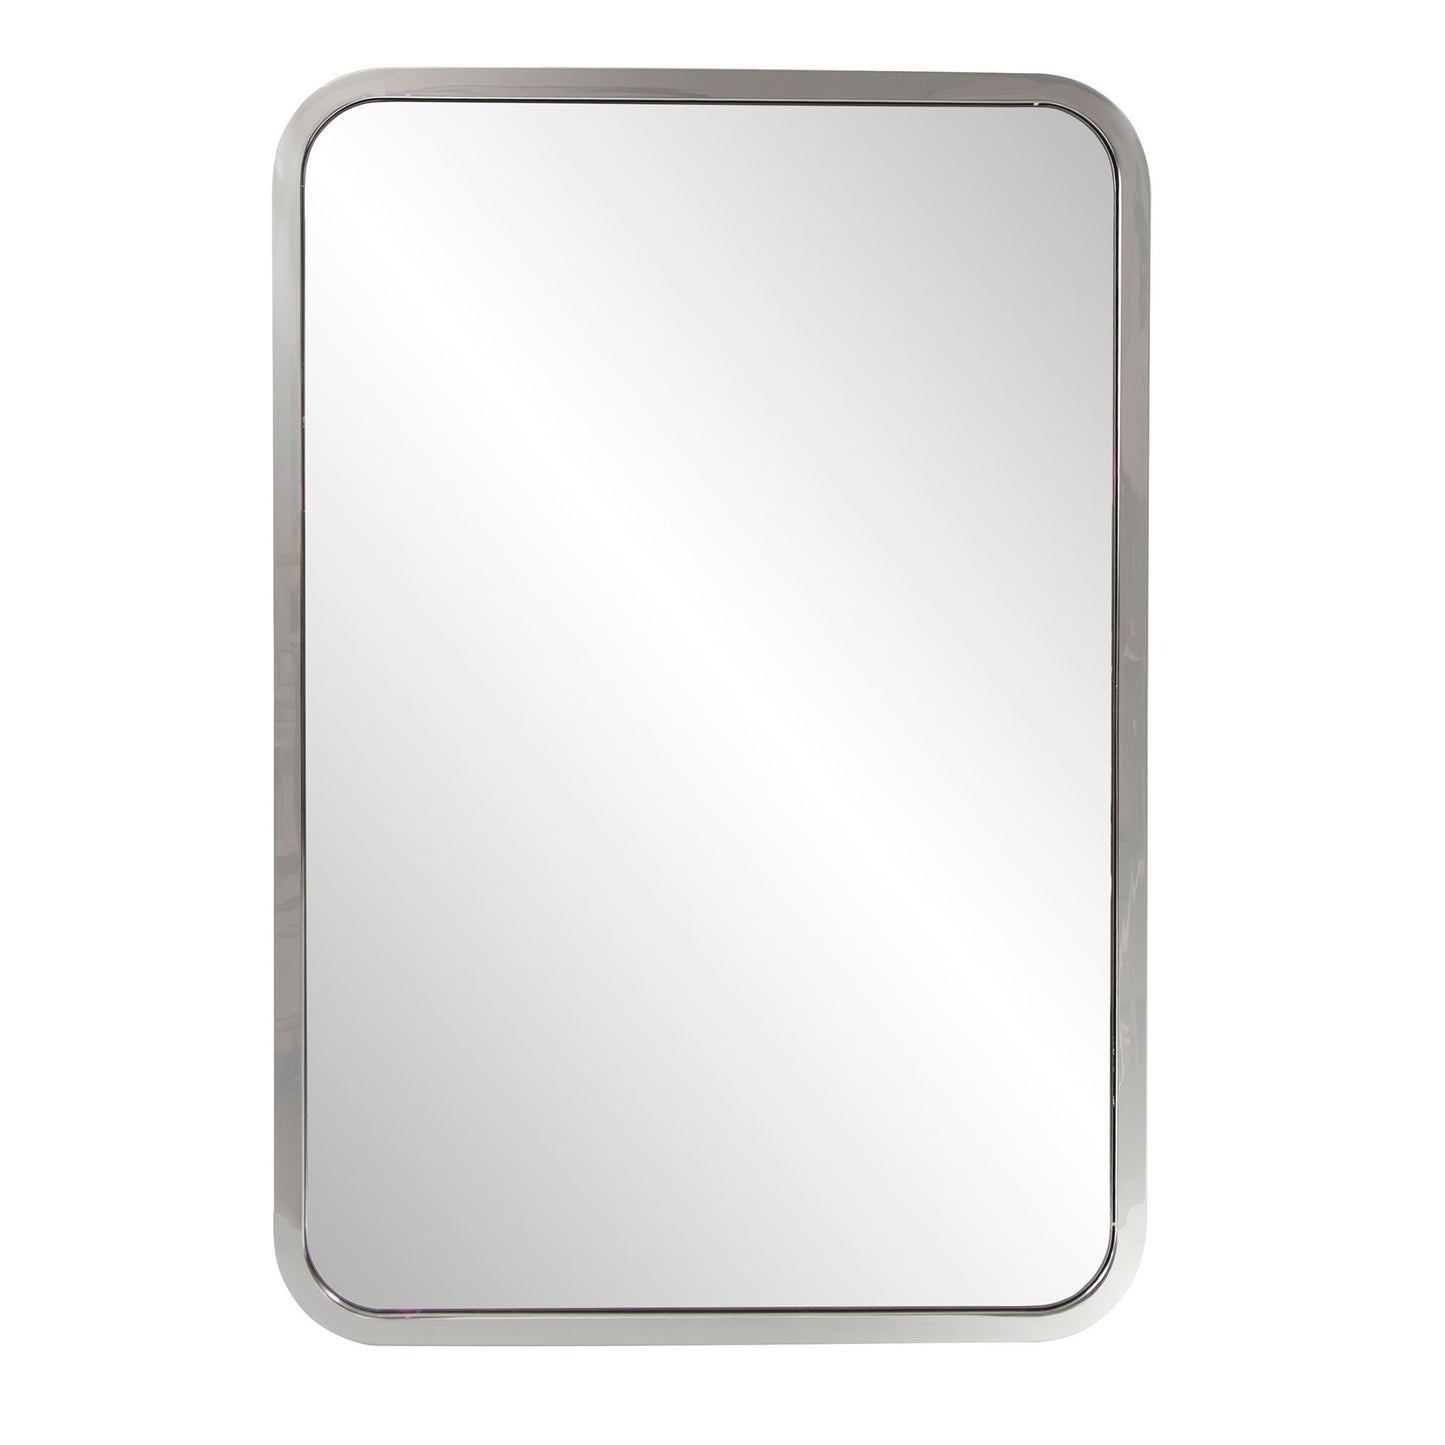 Sivon Rectangular Wall Mirror